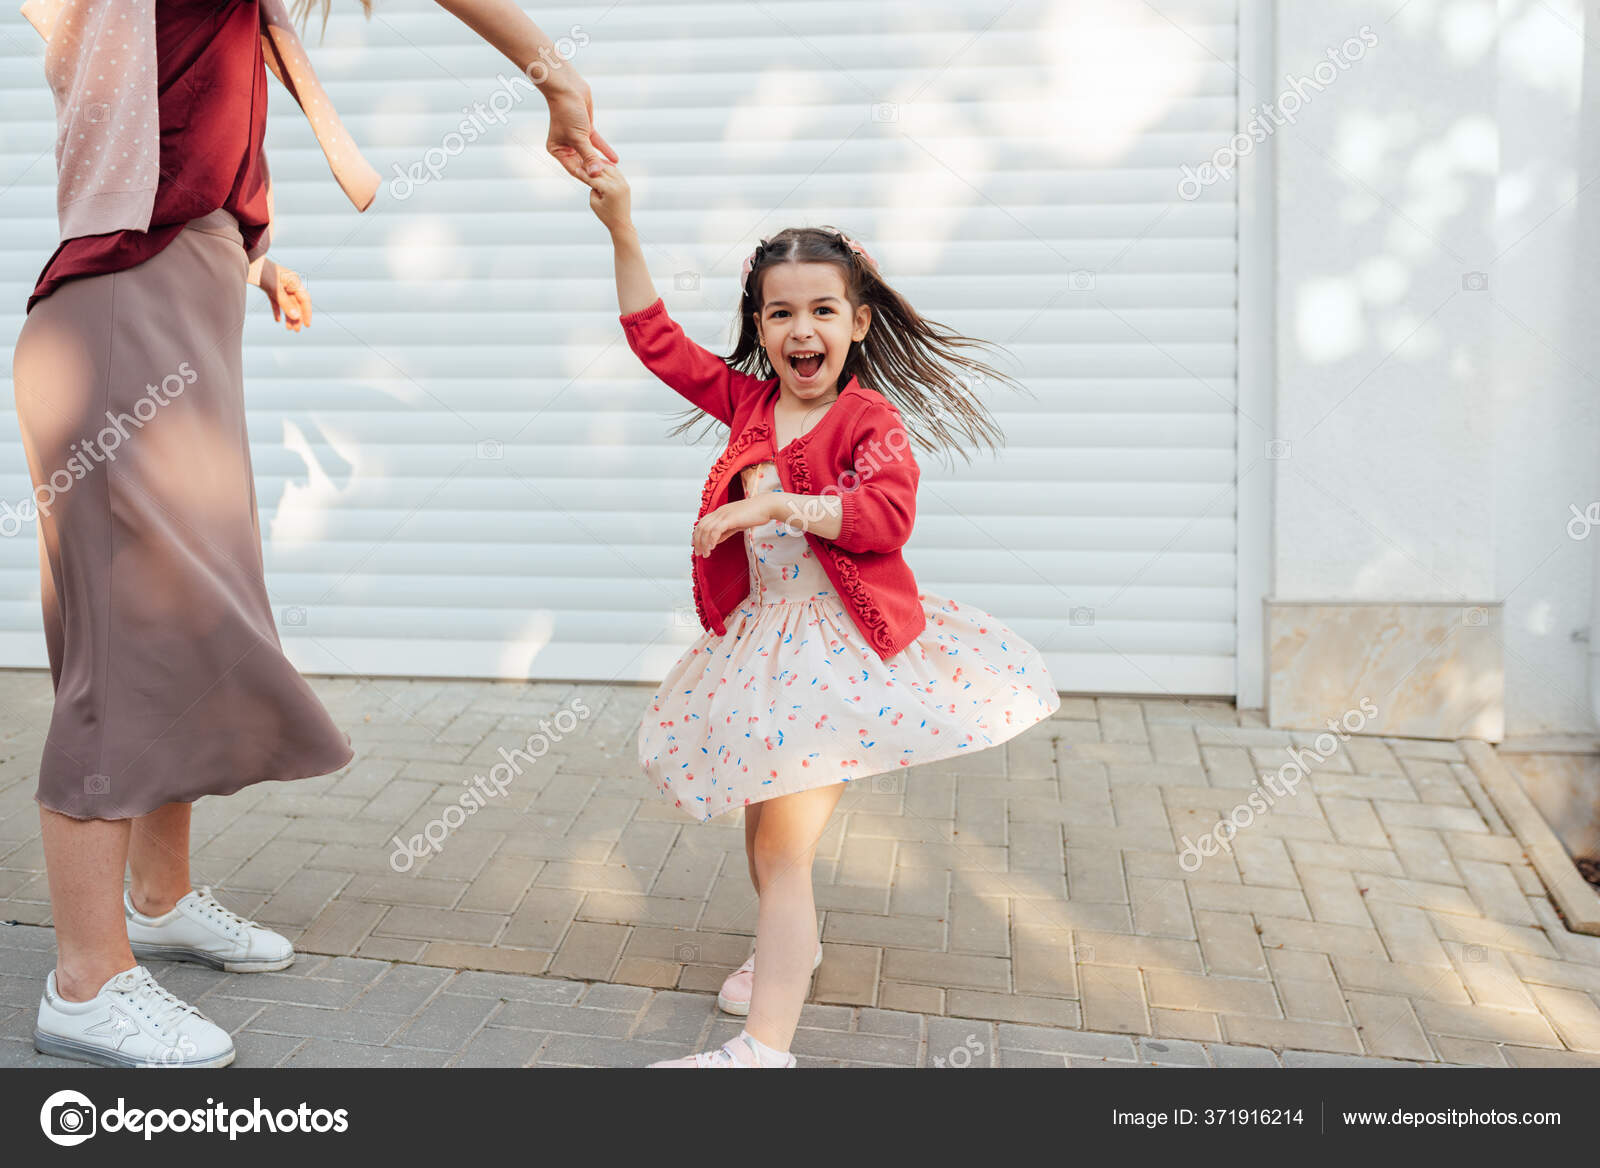 depositphotos 371916214 stock photo happy little girl laughing dancing